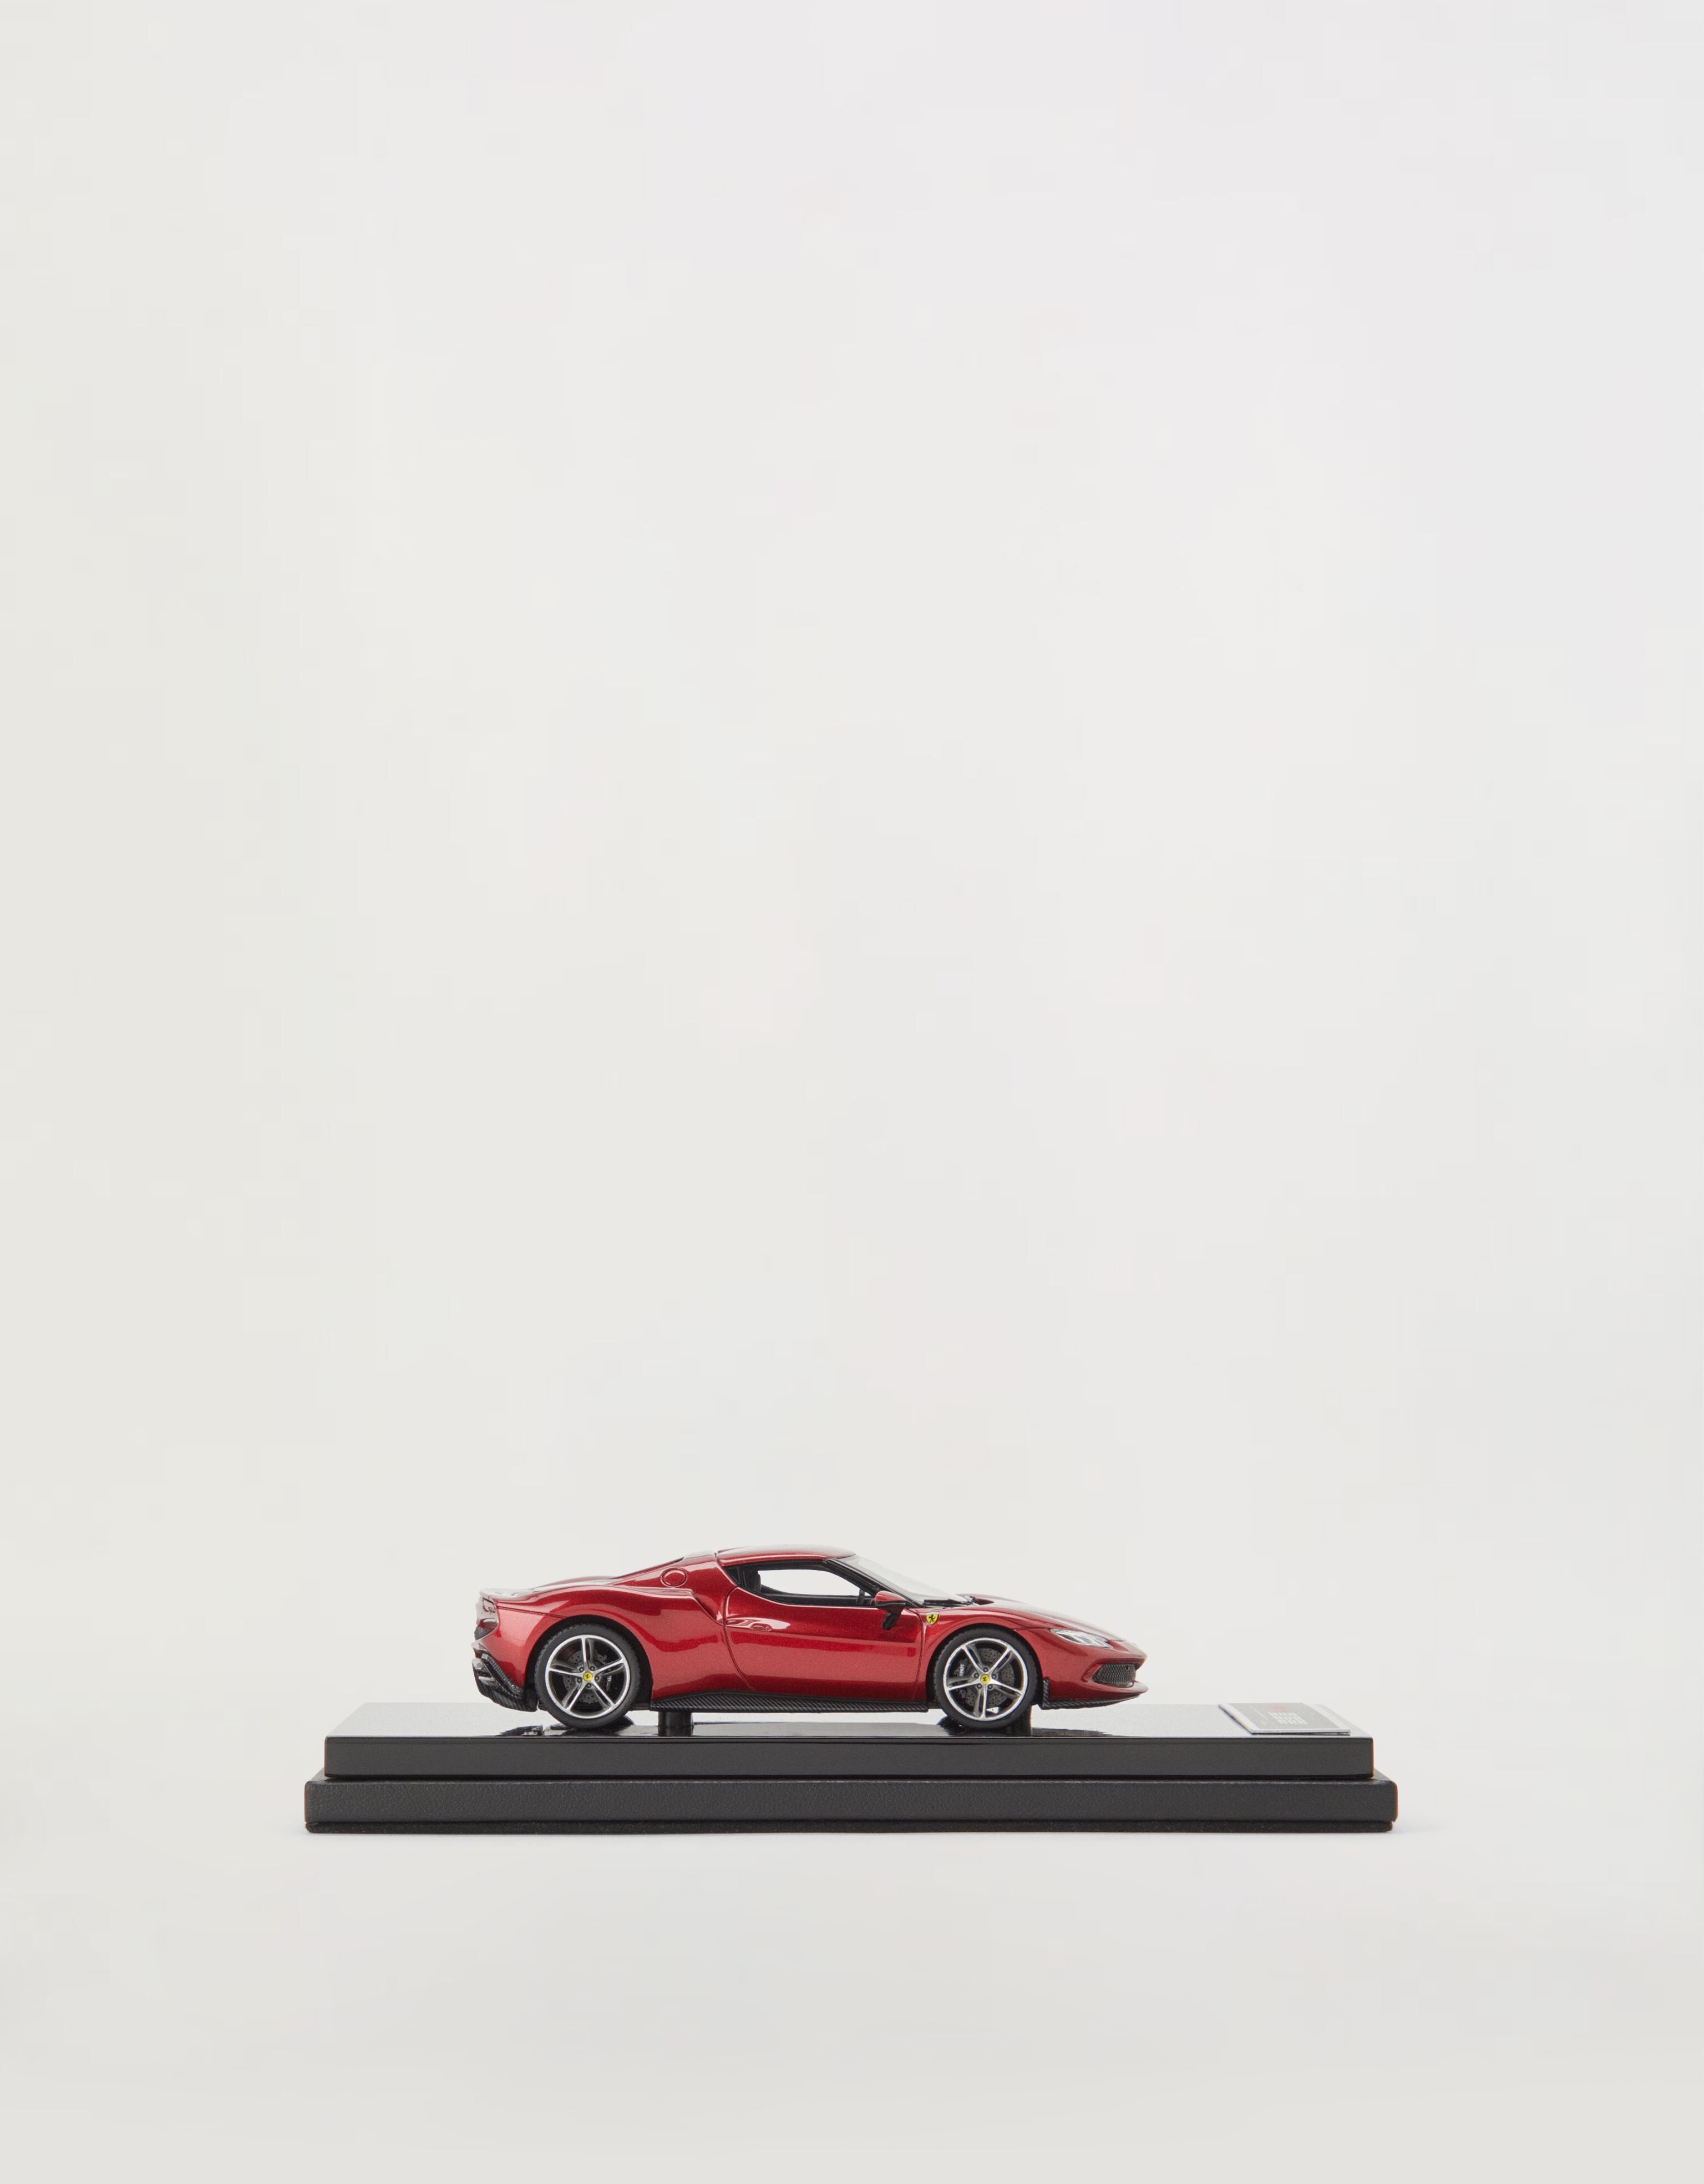 Ferrari 法拉利 296 GTB 1:43 模型车 Rosso Corsa 红色 47303f